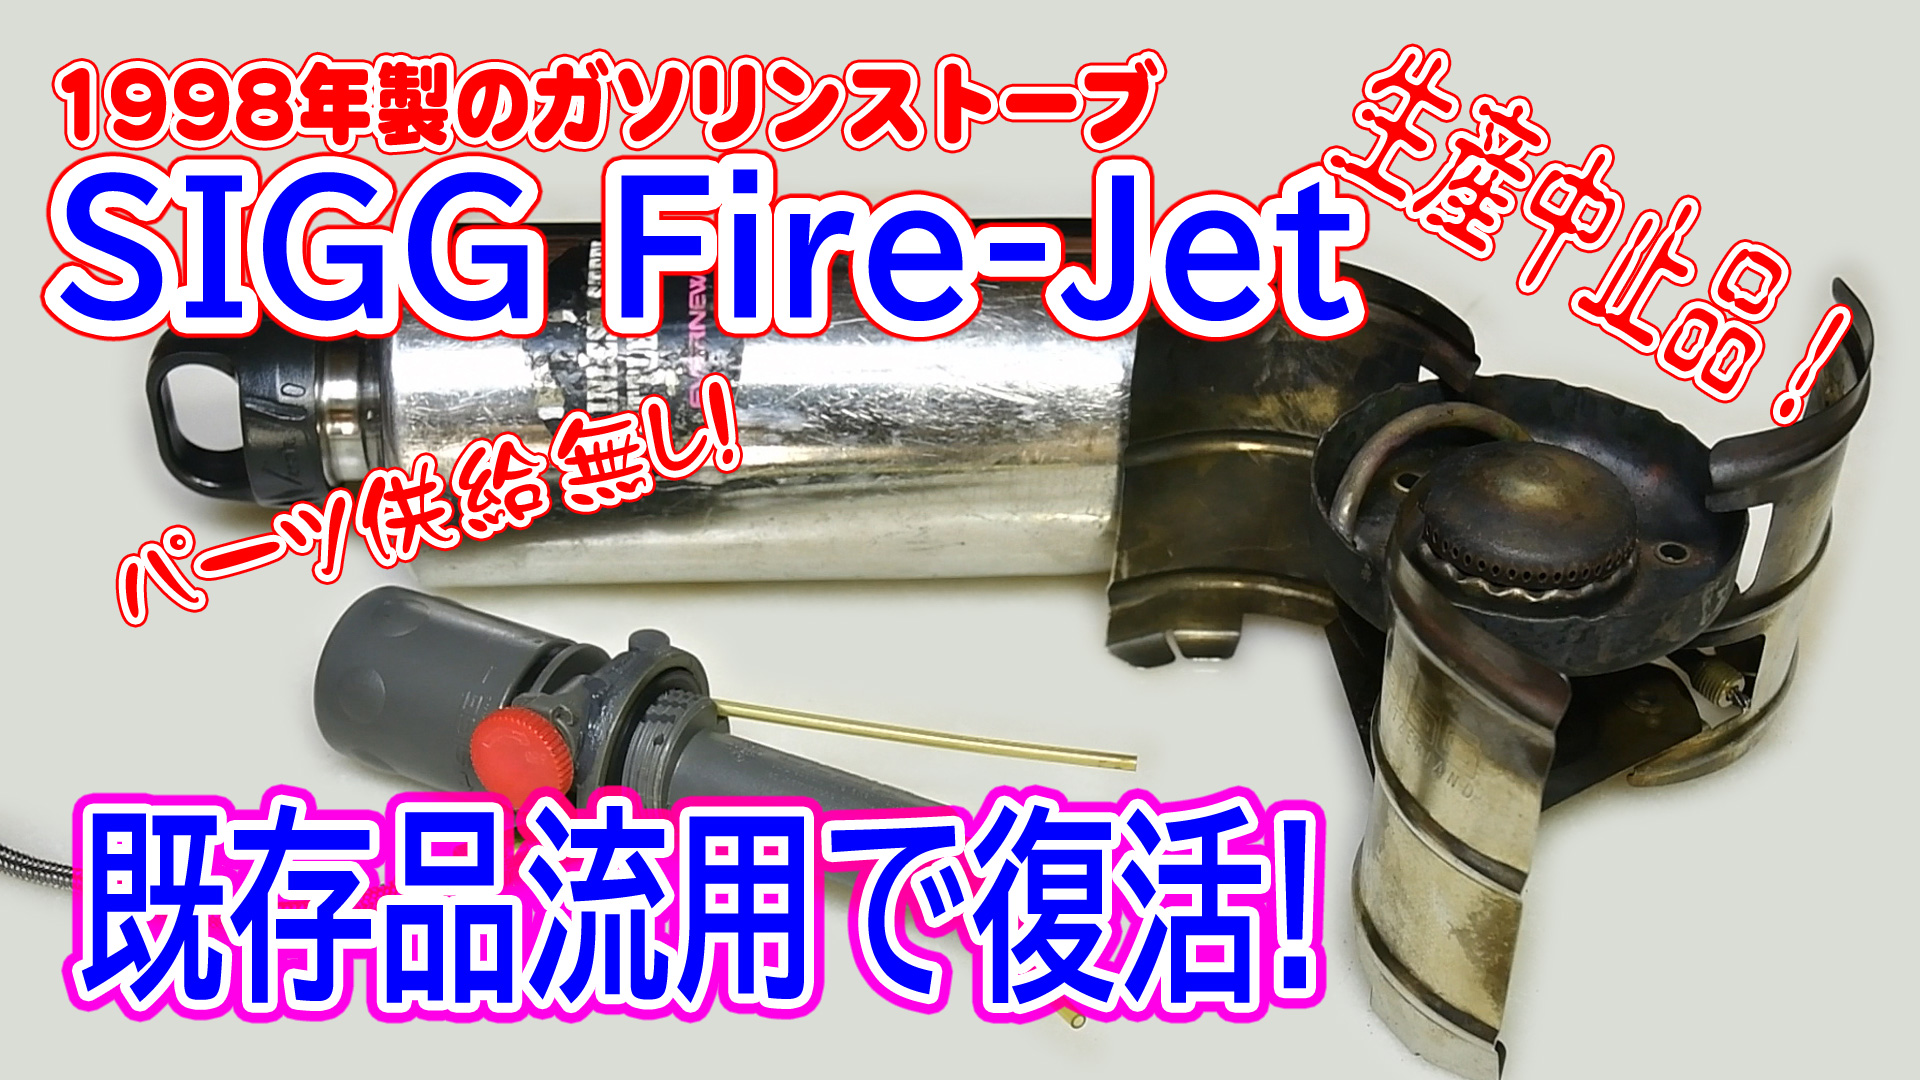 SIGG Fire Jetのリペア（ポンプ部のガソリン漏れ修理） – 食いたい魚は己で釣れ